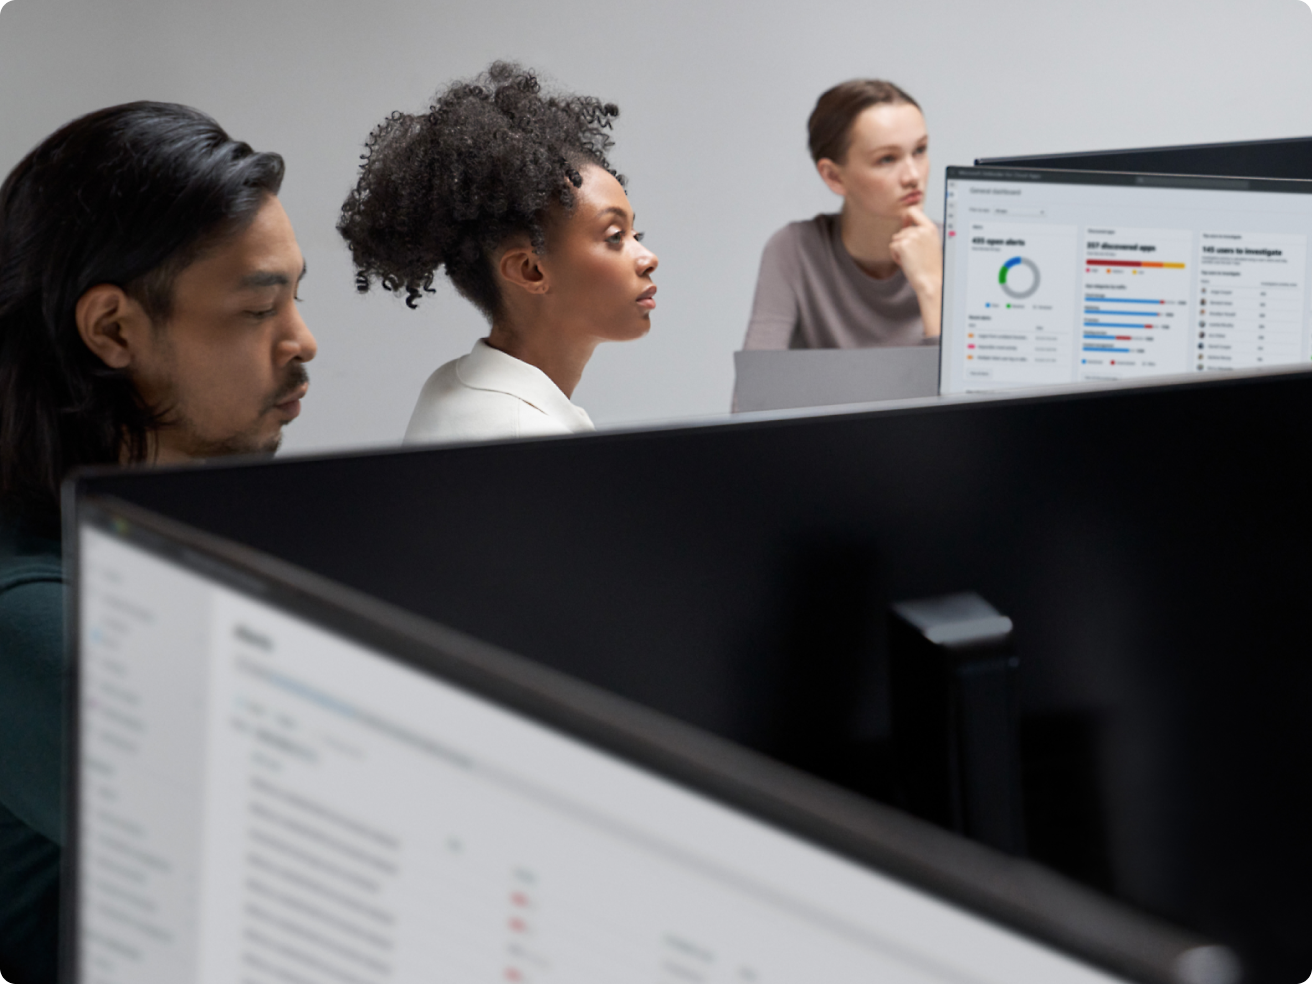 Tiga karyawan kantor fokus pada layar komputer yang menampilkan grafik dan data dalam suasana kantor modern.